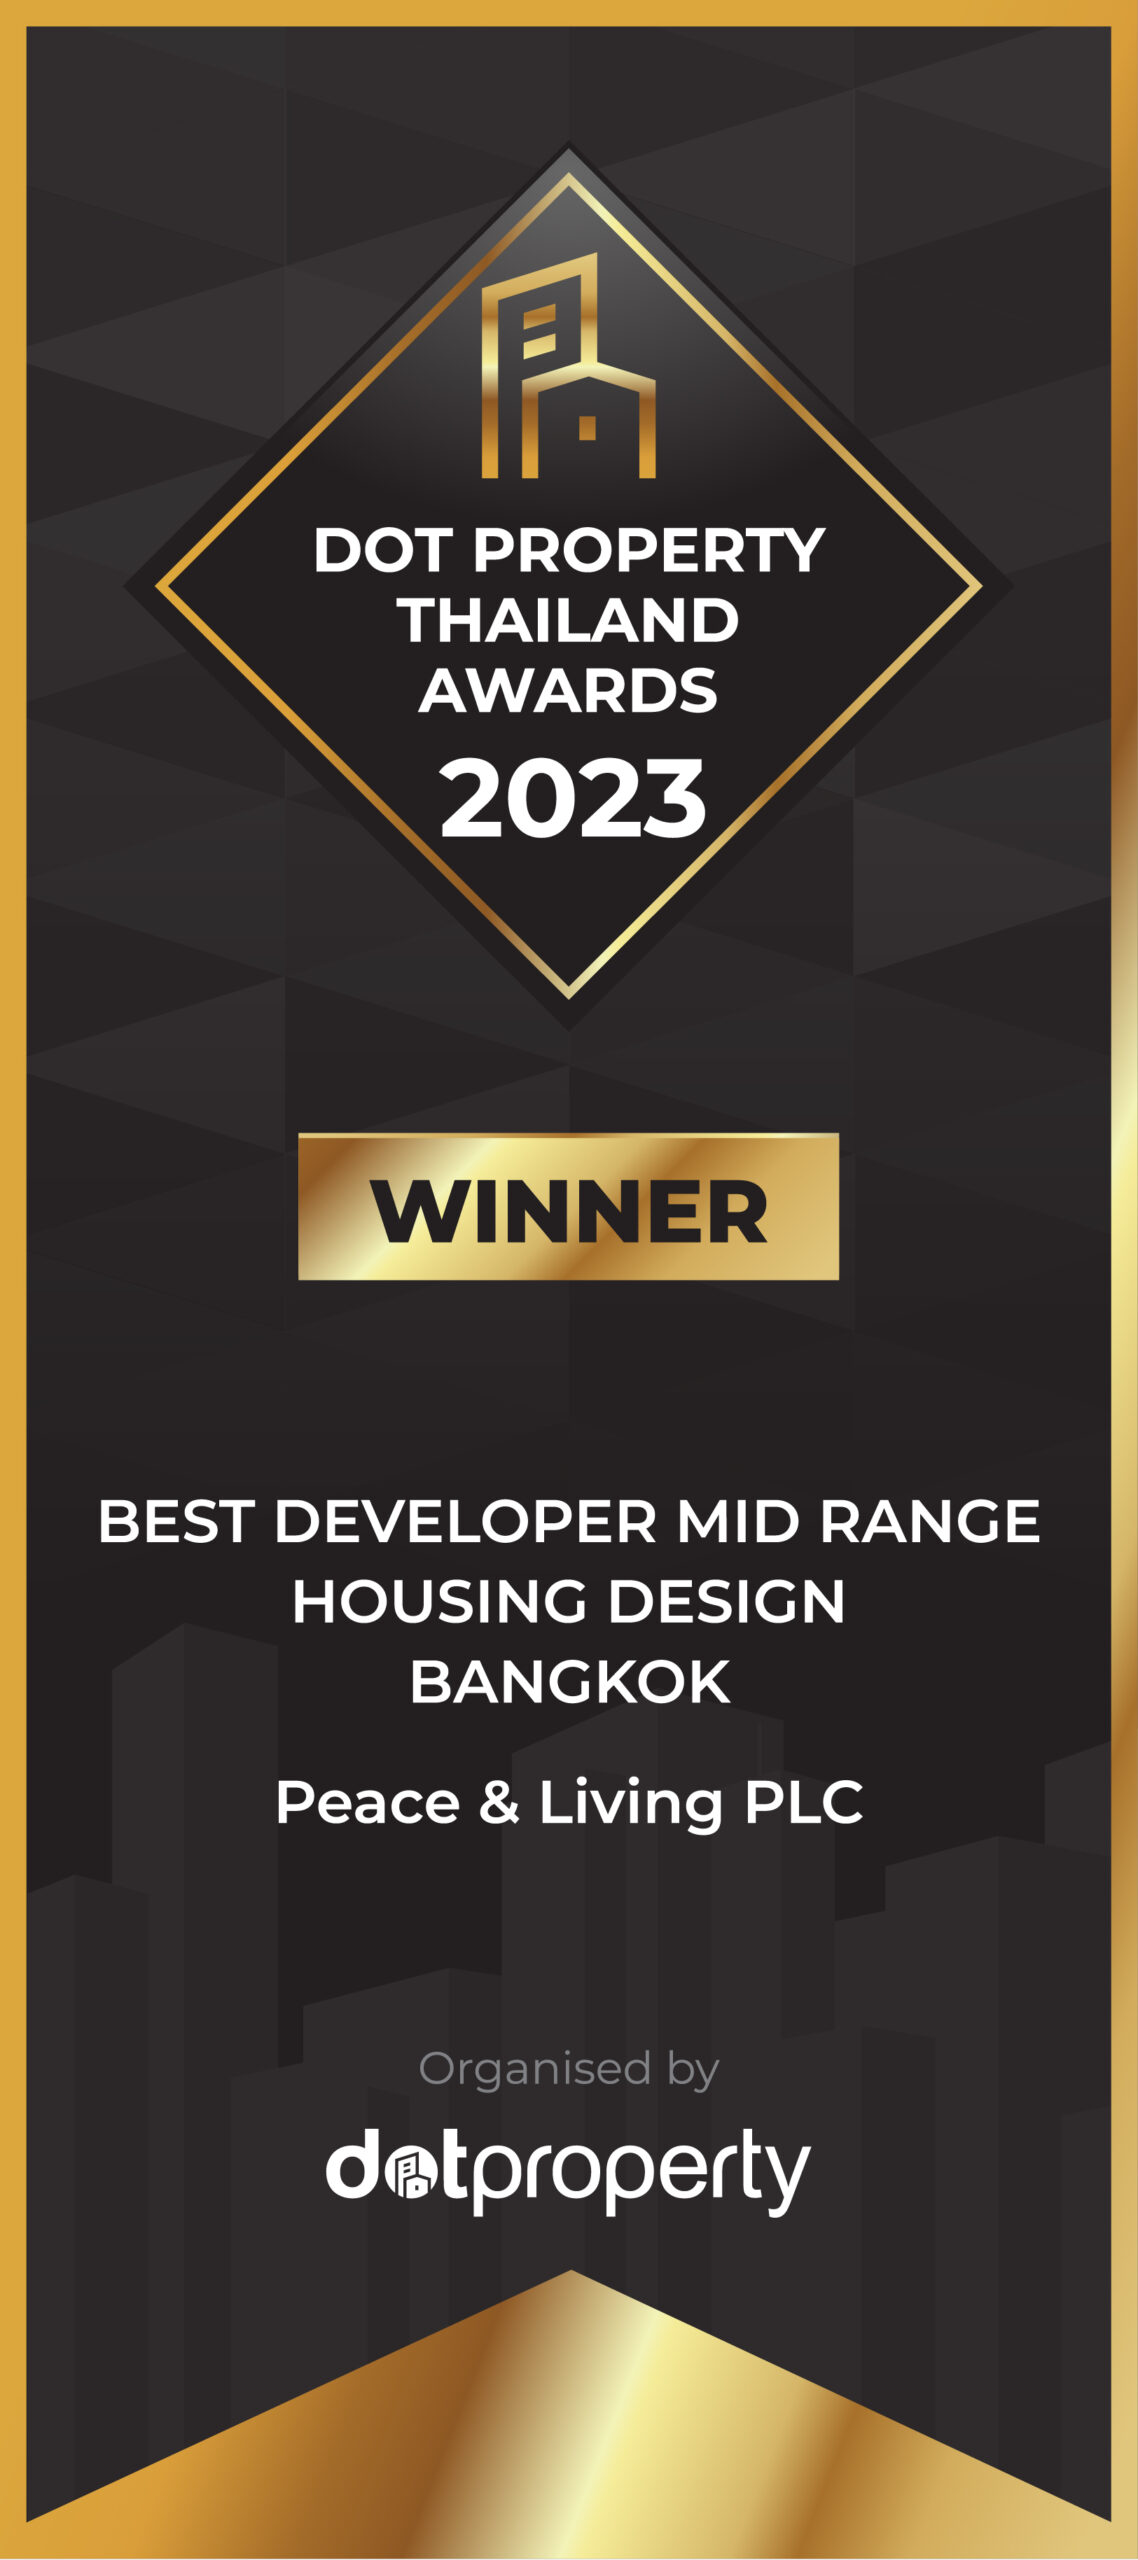 PEACE-Dot Property awards logo